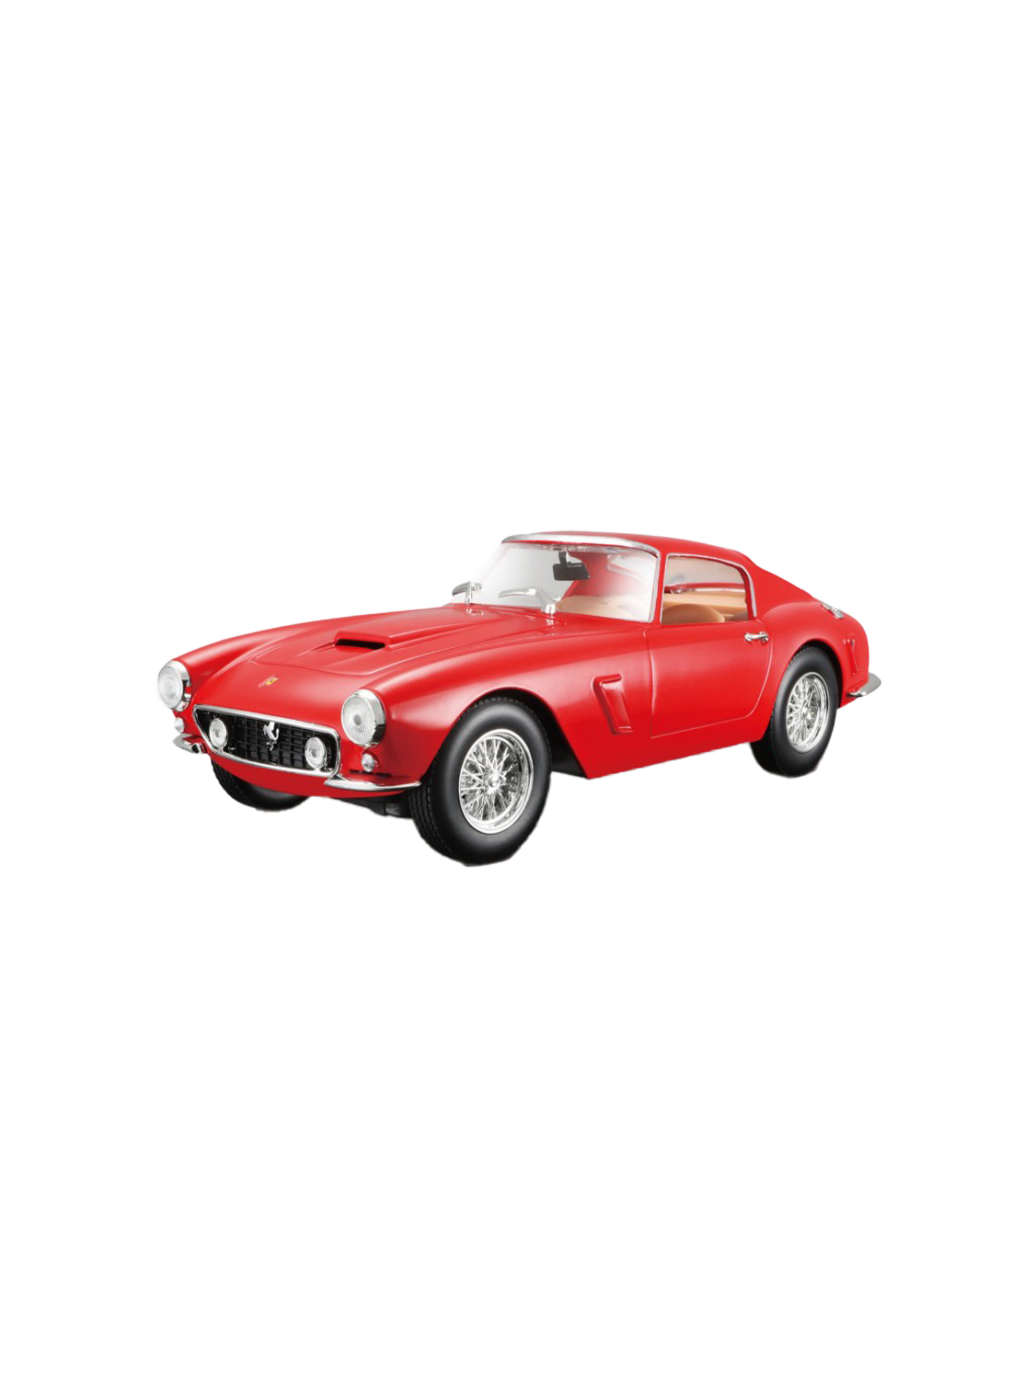 Metal model of the Ferrari 250GT Berlinetta